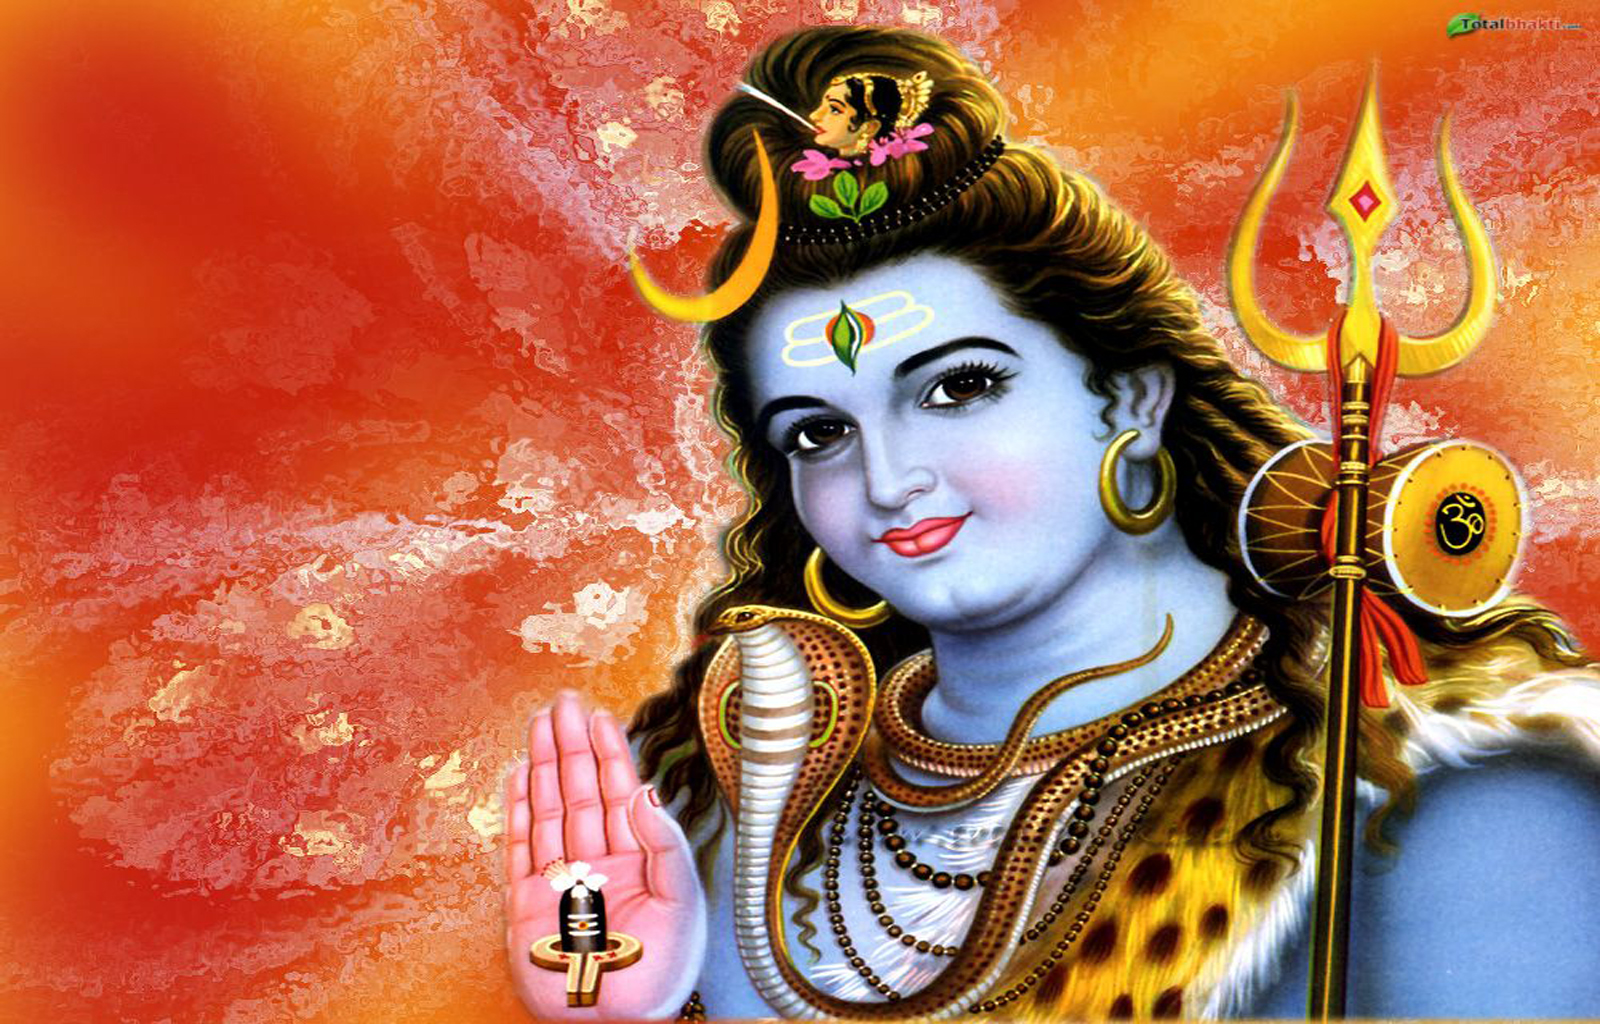 Shiva wallpaper, Hindu wallpaper, This is lord shiva blessinng